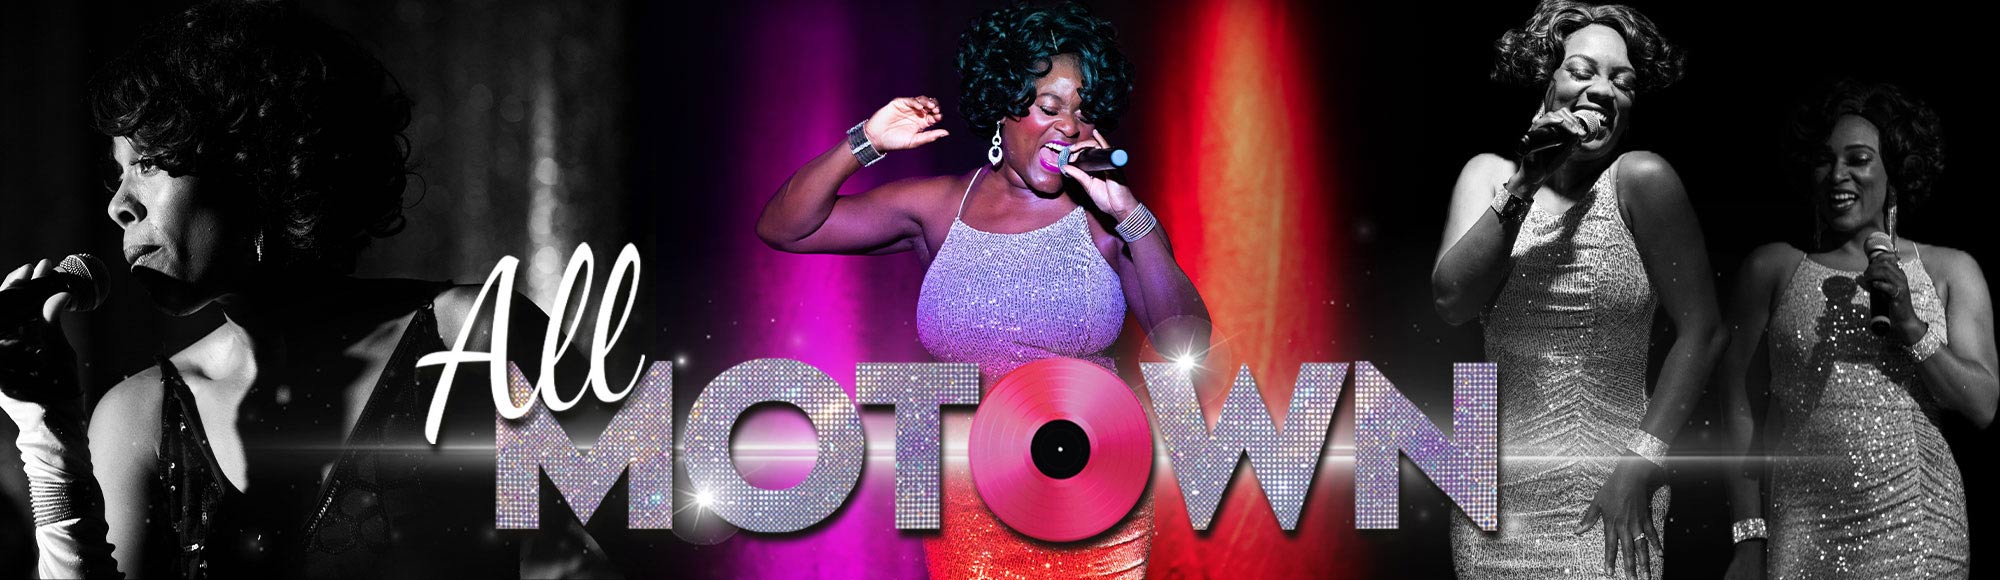 All Motown show